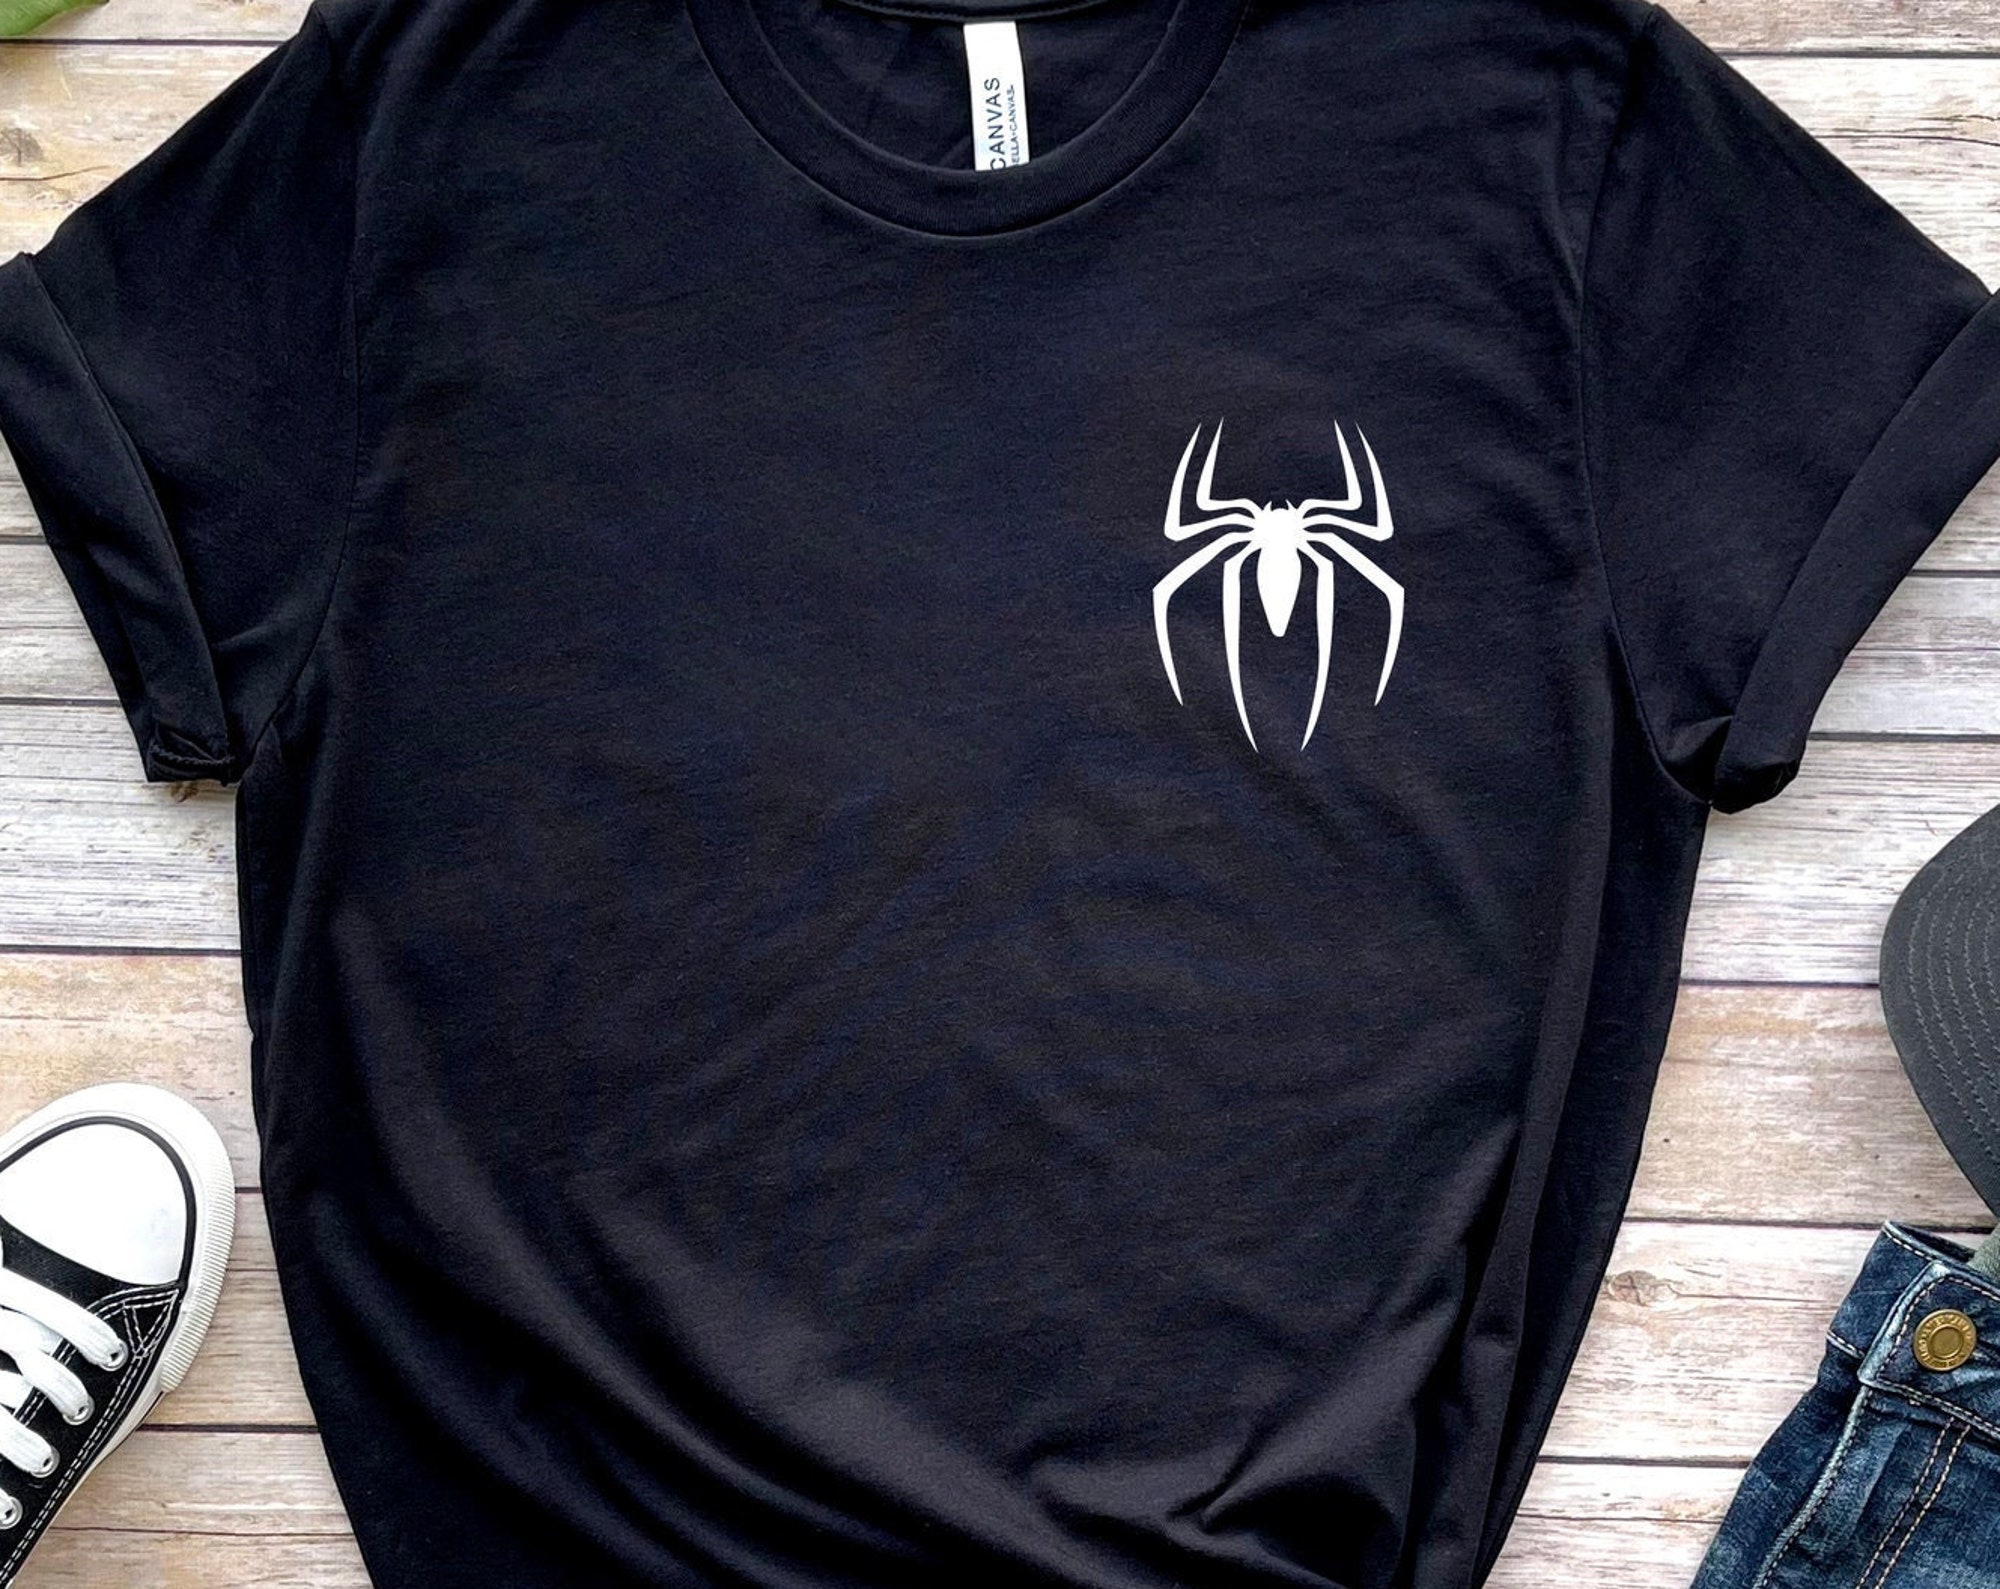 Discover Spiderman Shirt, Superhero Shirt, Spider T-shirt, Dad Son Shirt, Gift for Kids, Gift for Men, Spider Tee, Trendy Shirt